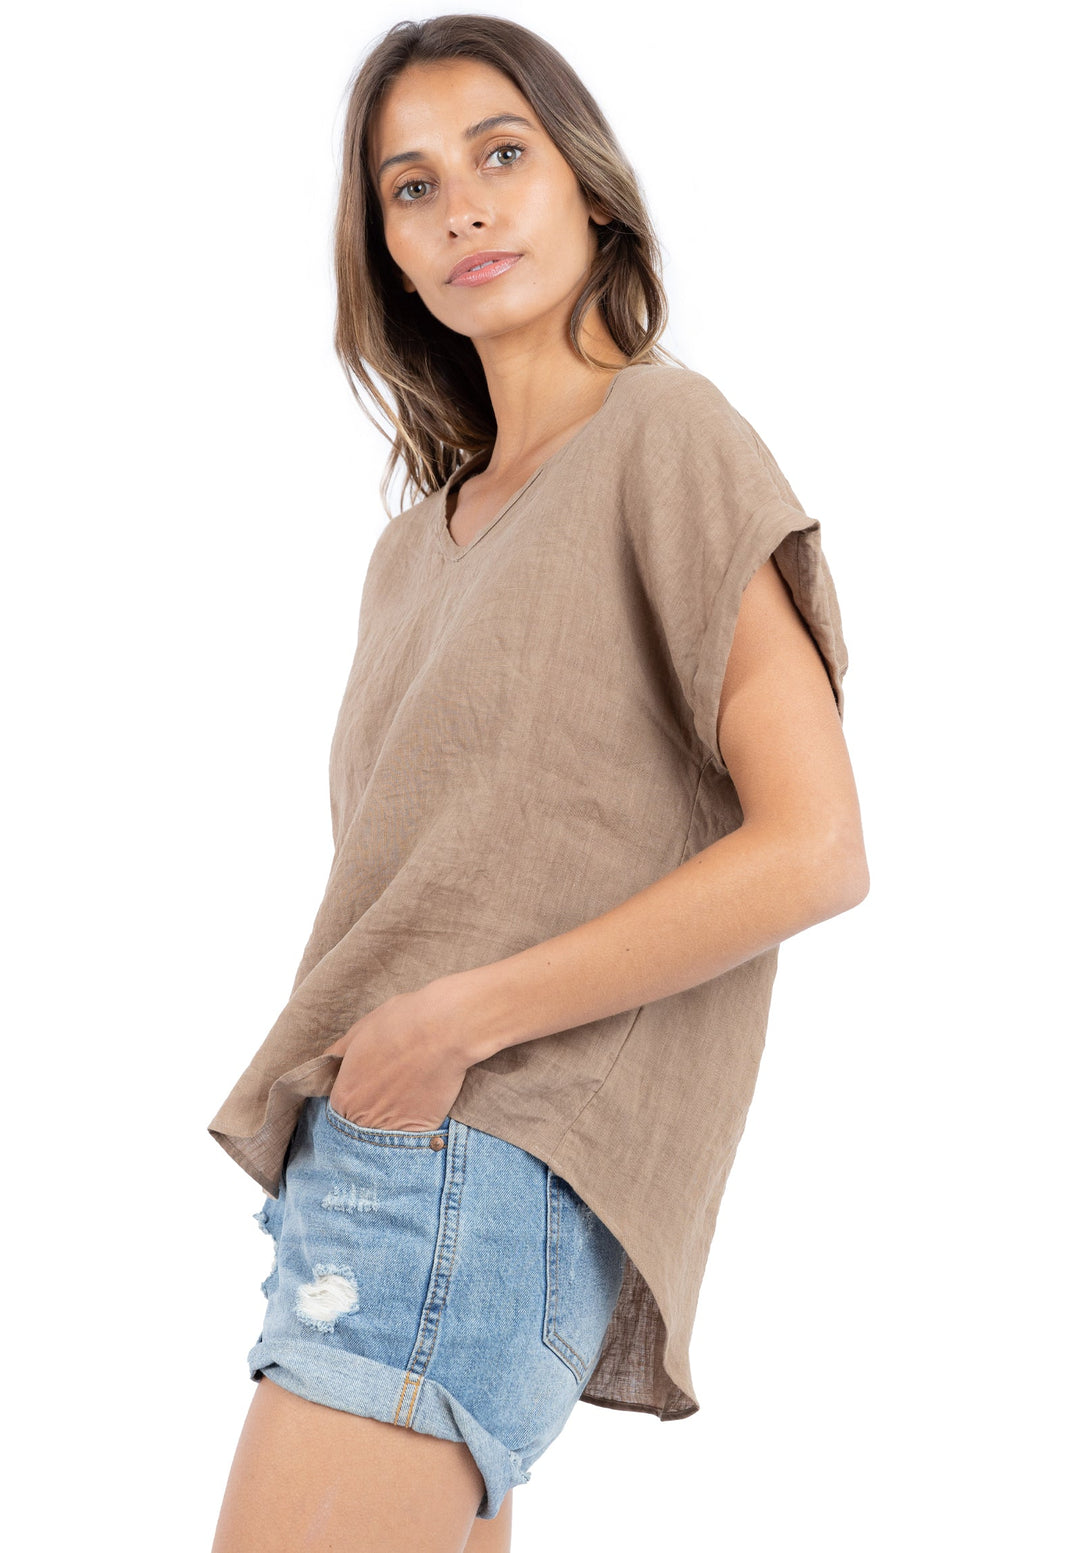 Martina Hazelnut, Sand Washed Linen T-Shirt